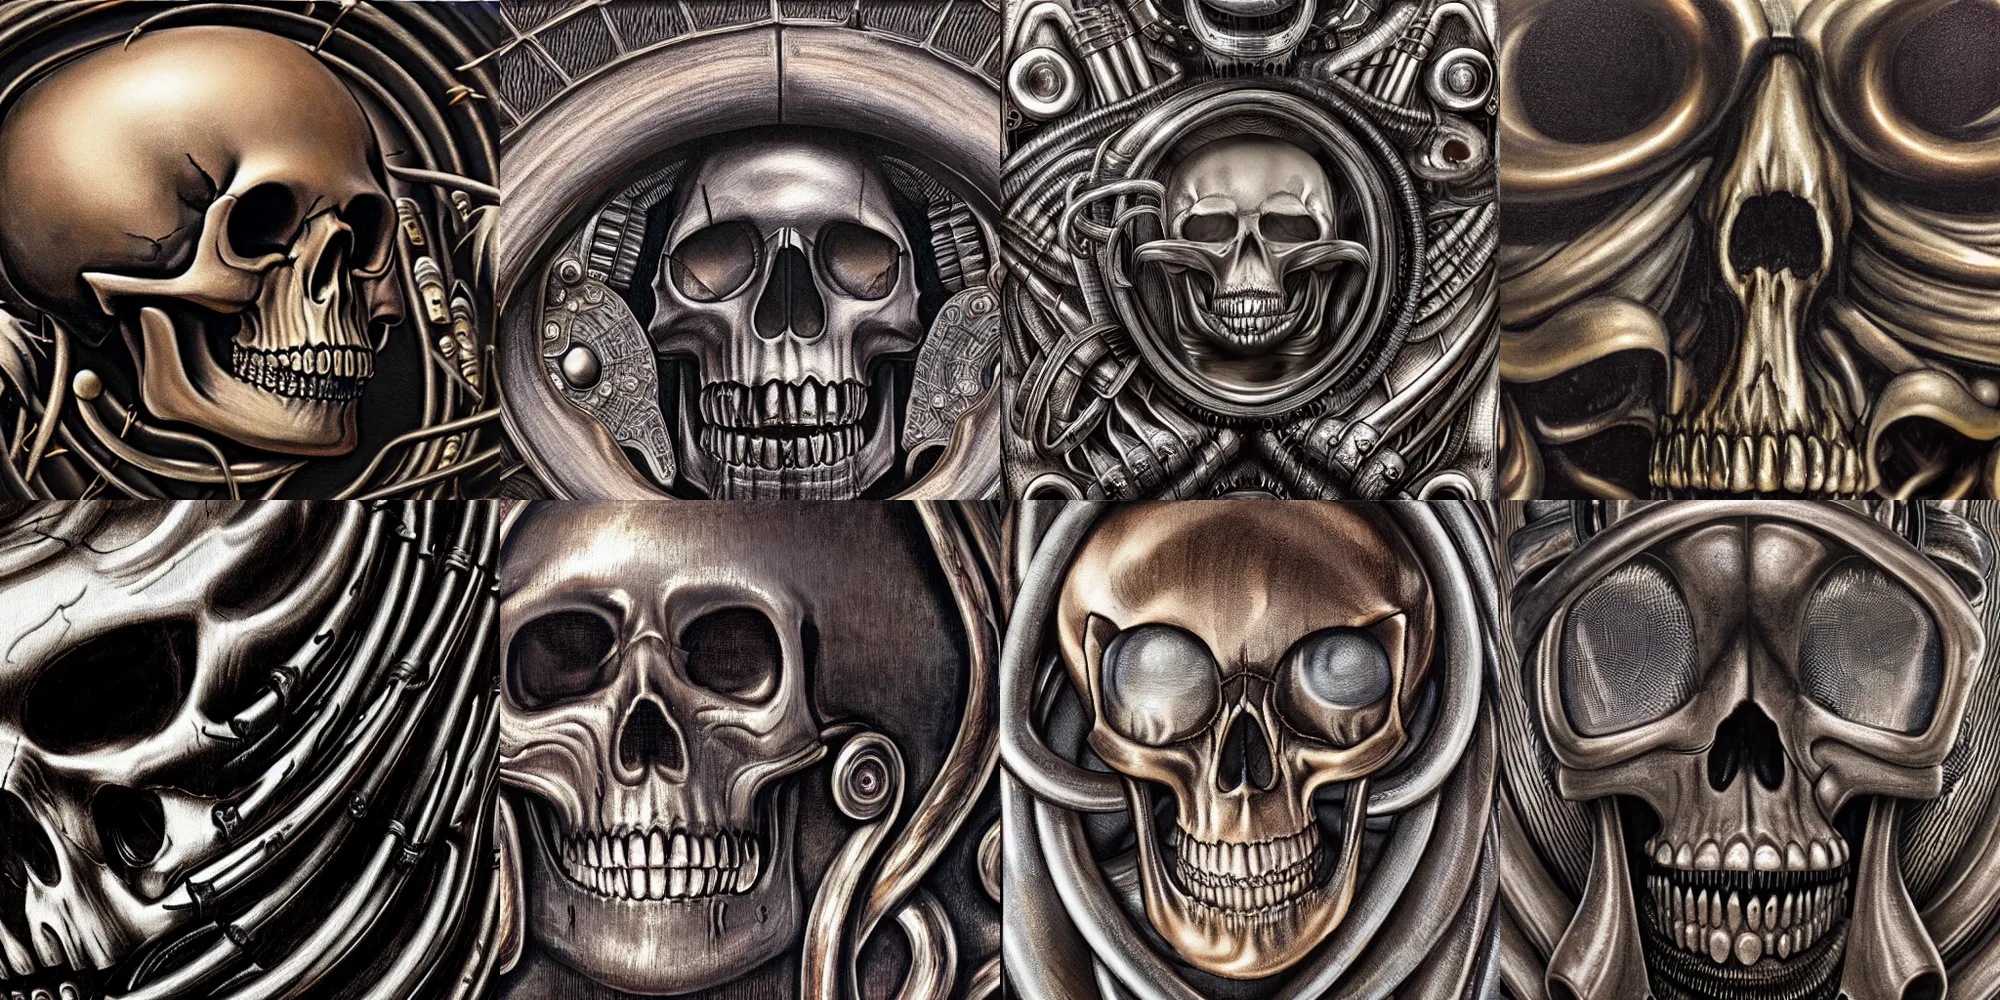 Prompt: closeup of metalic mural, skull, coils, metal album cover, by giger, h.r giger, hr giger, highly detailed,soft lighting, film grain, medium format, 8k resolution, oil on canvas